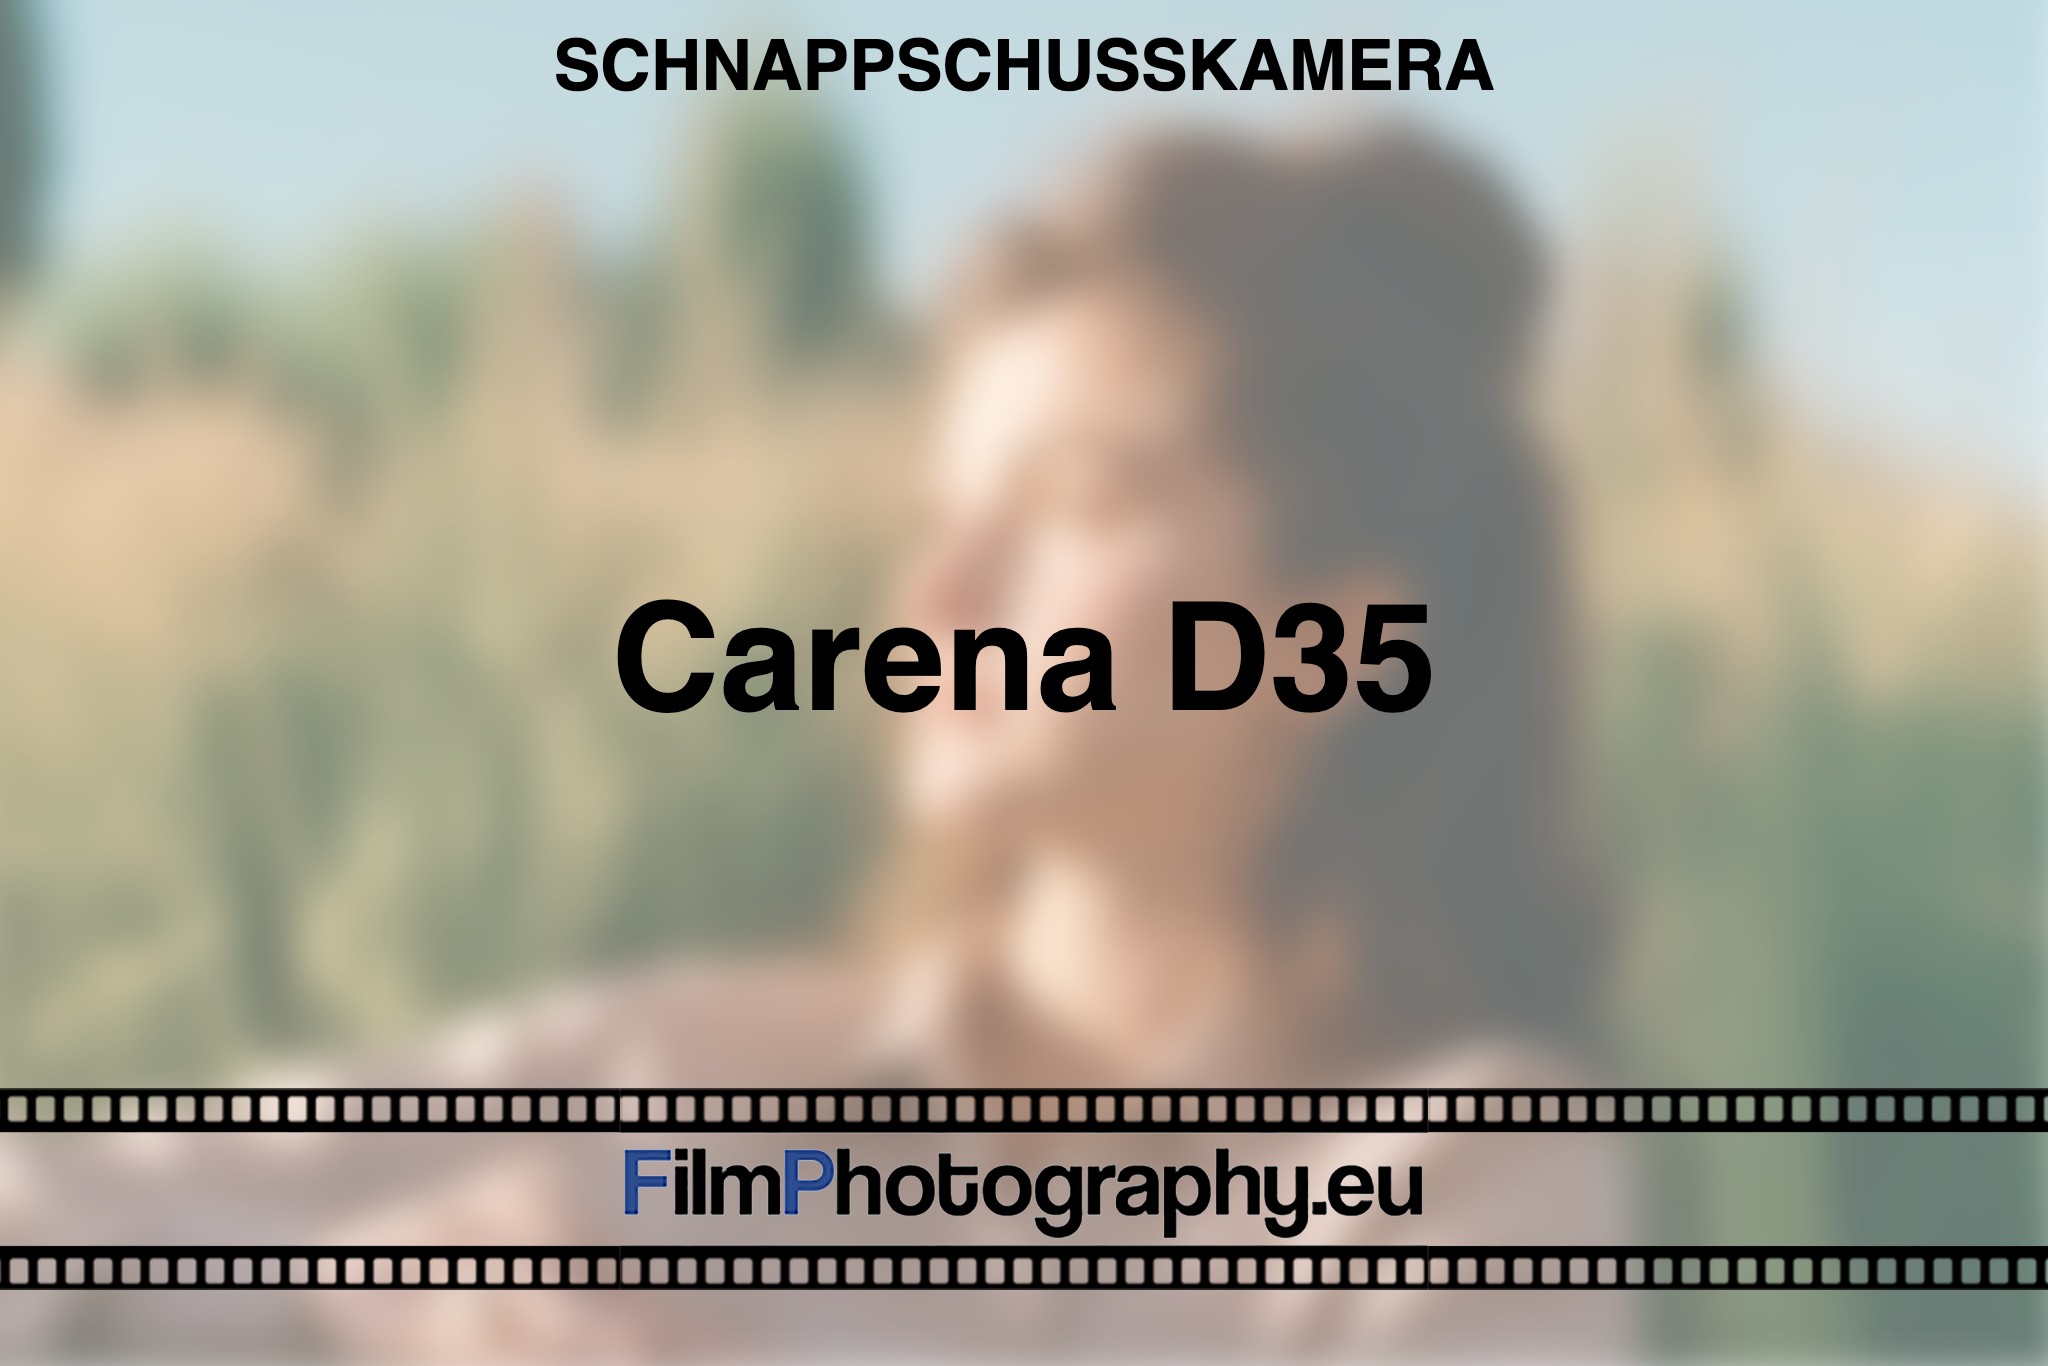 carena-d35-schnappschusskamera-bnv